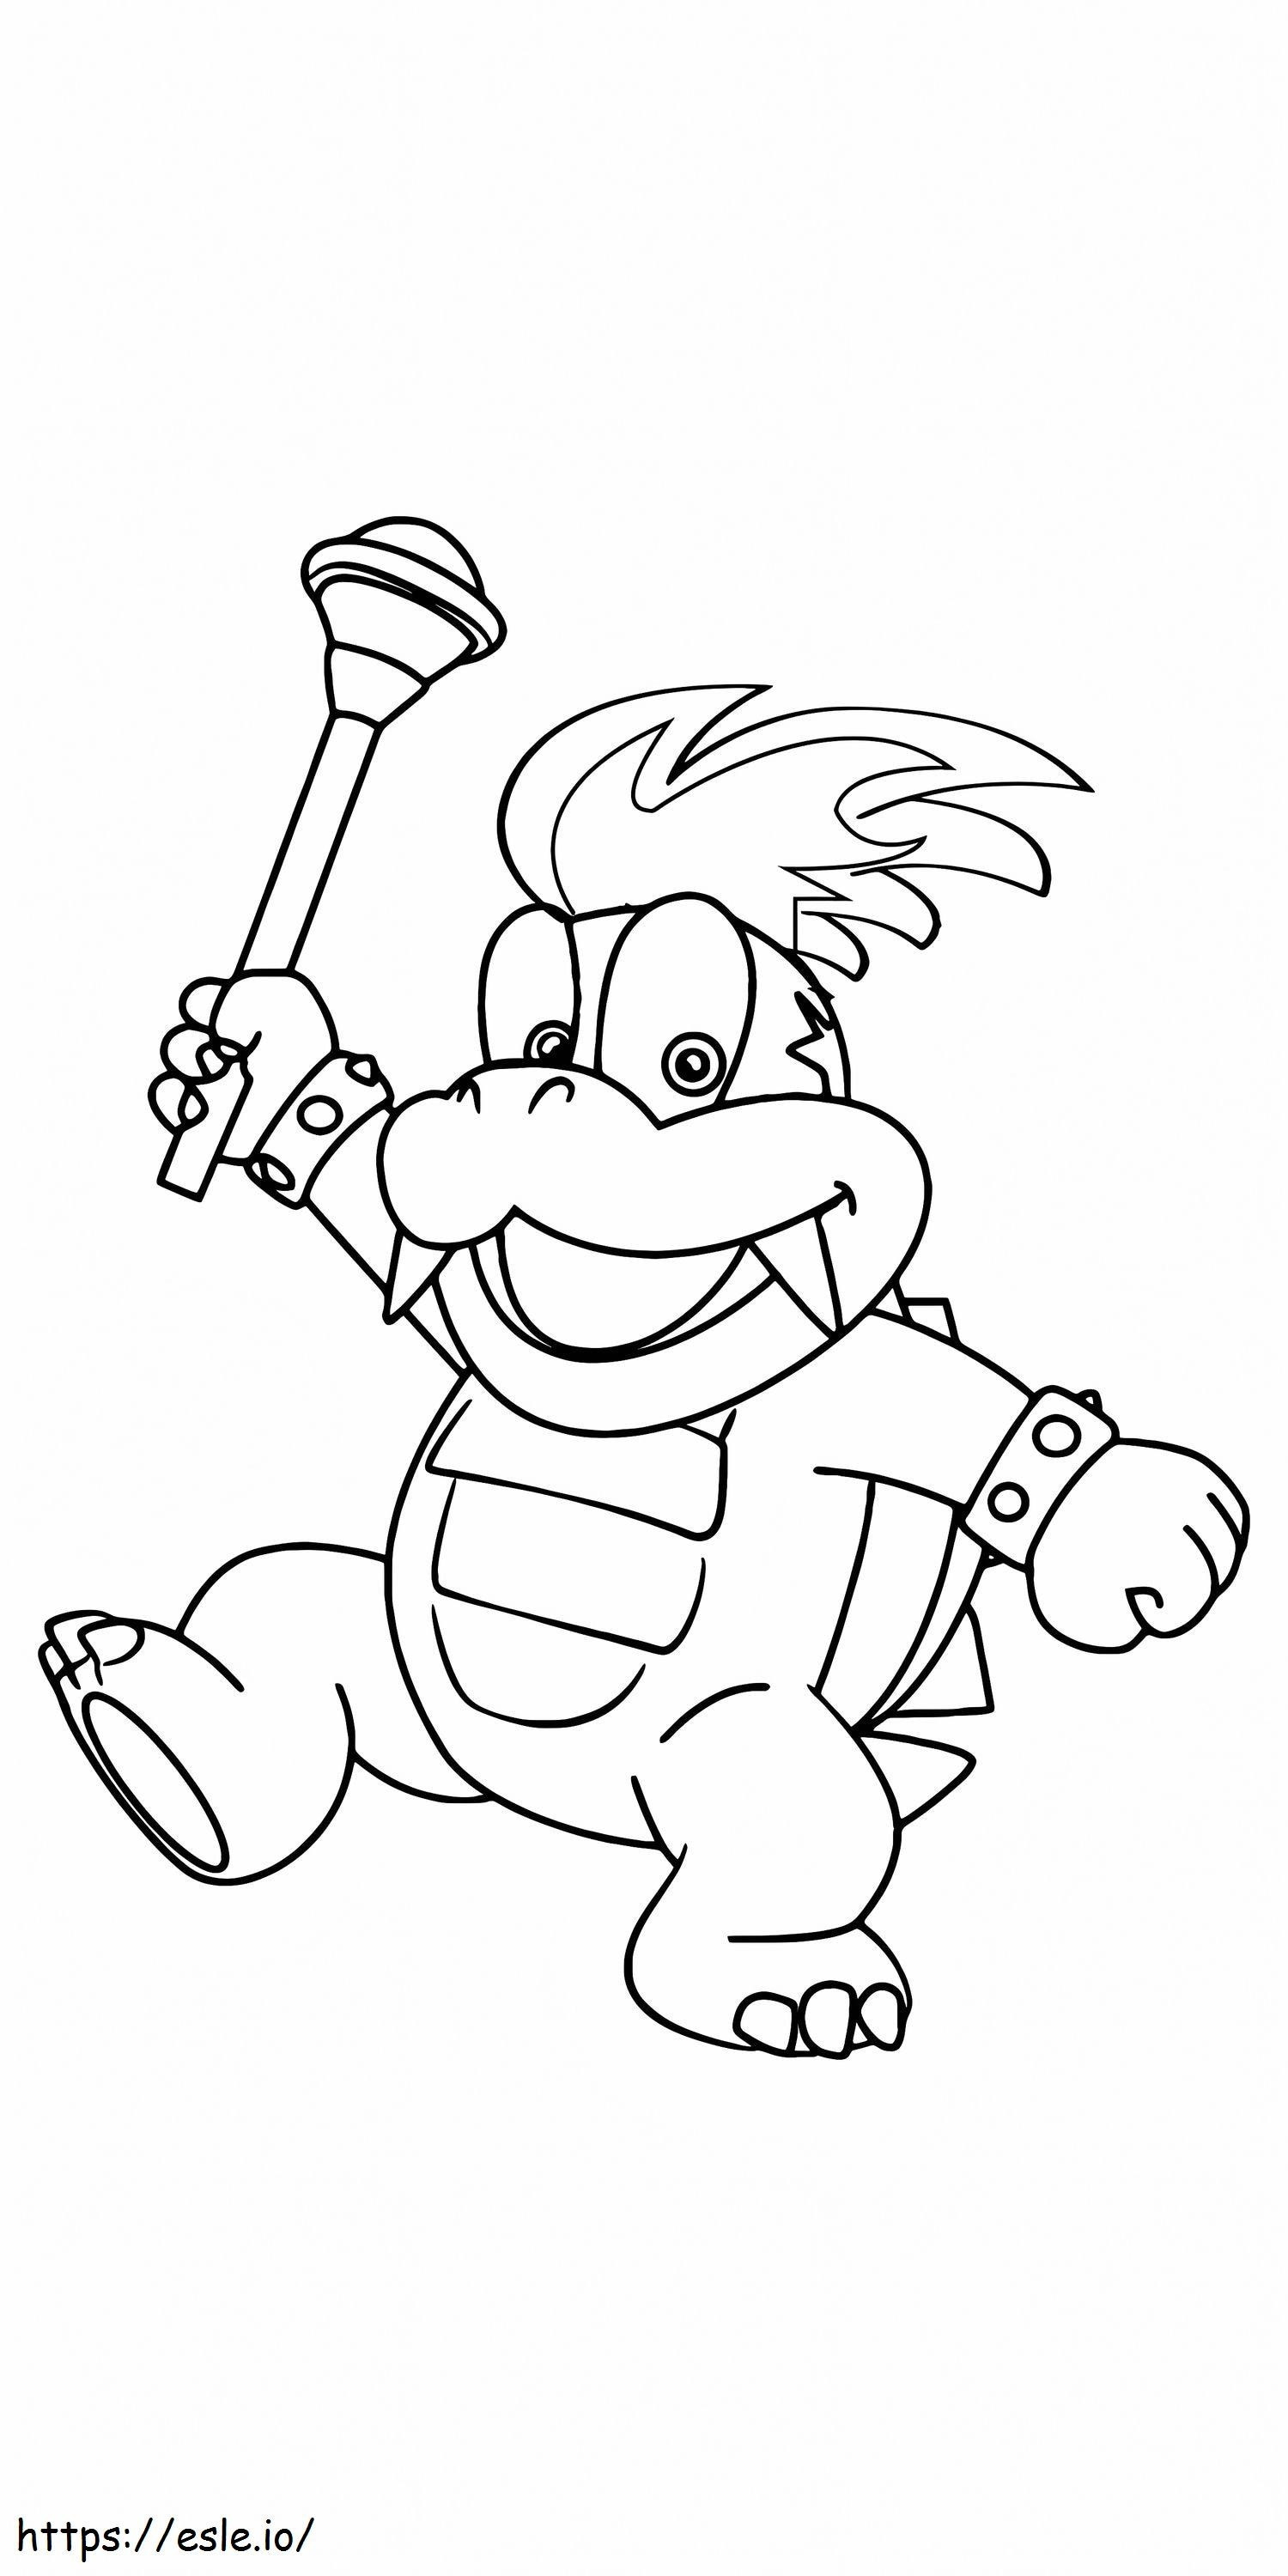 Super Mario – Bowser 01 – Imagens para Colorir